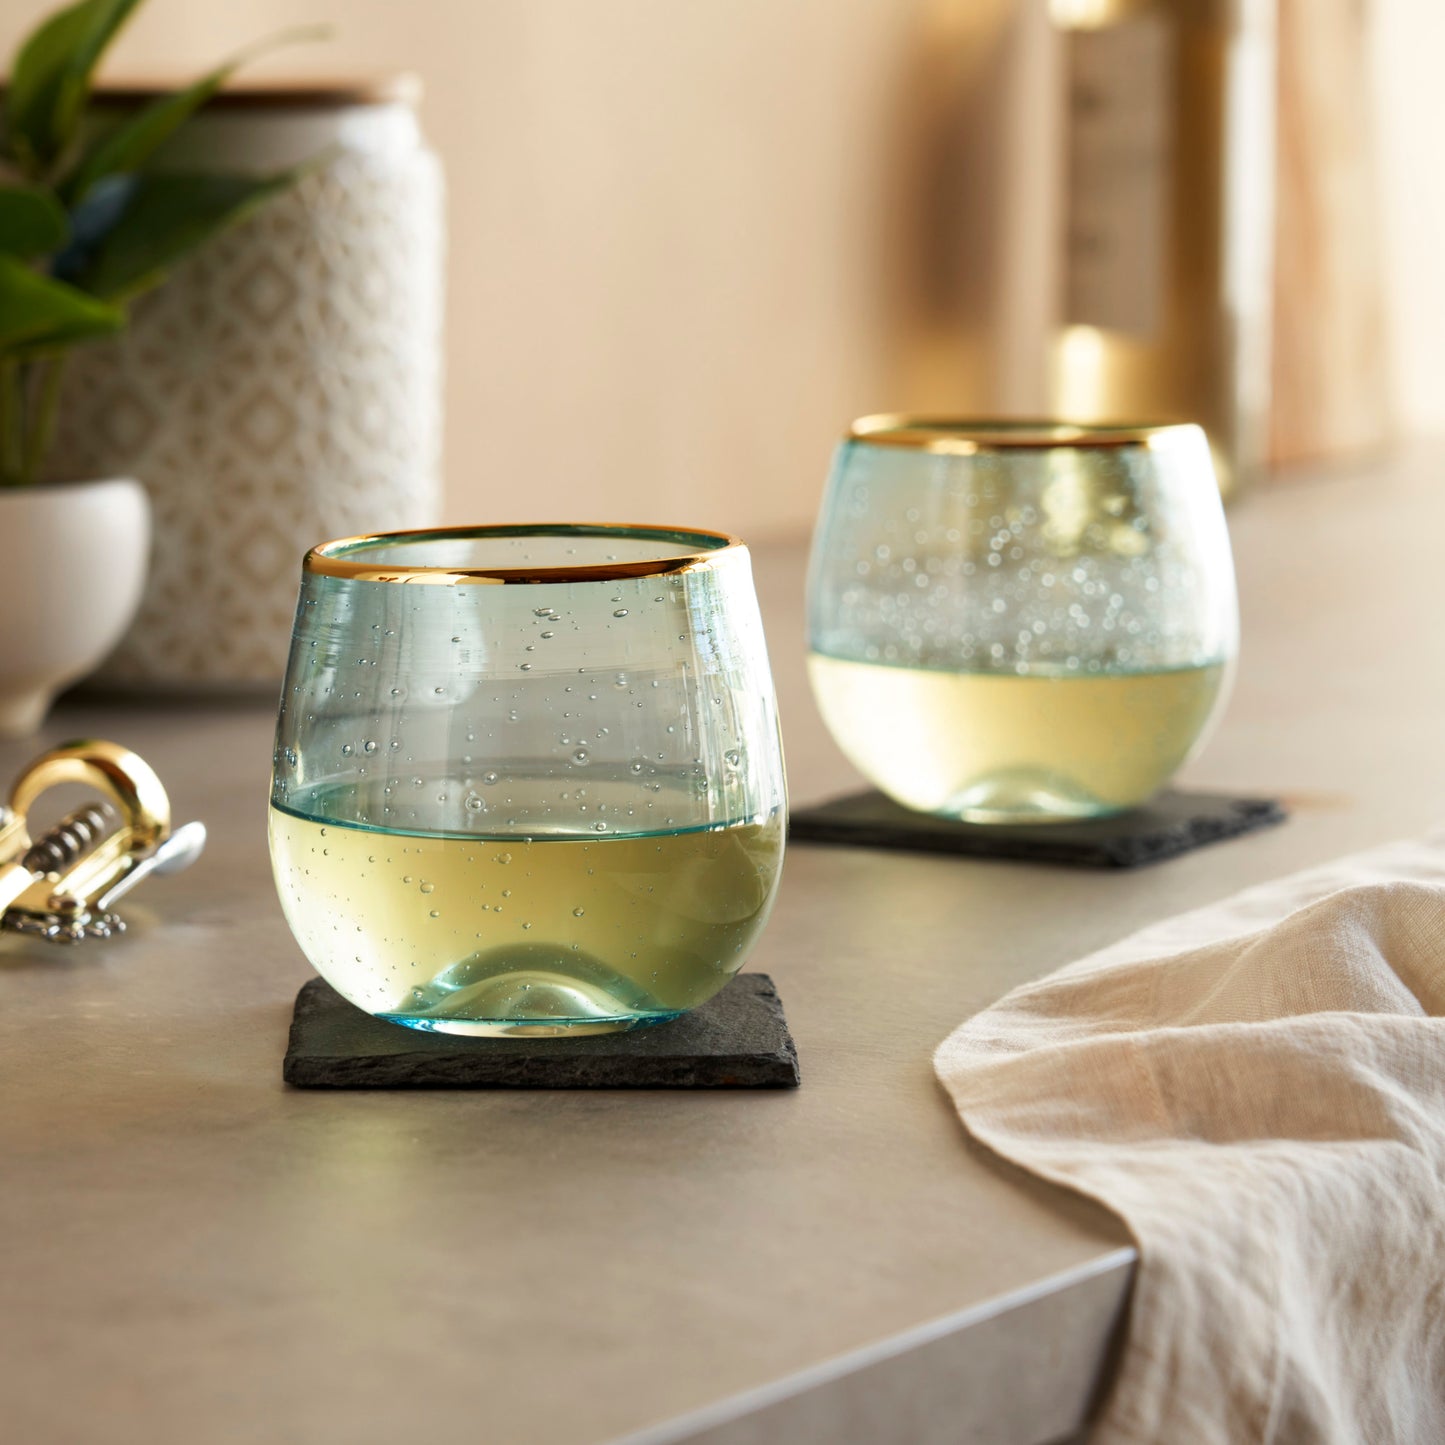 Aqua Bubble Stemless Wine Glass Set by Twine®